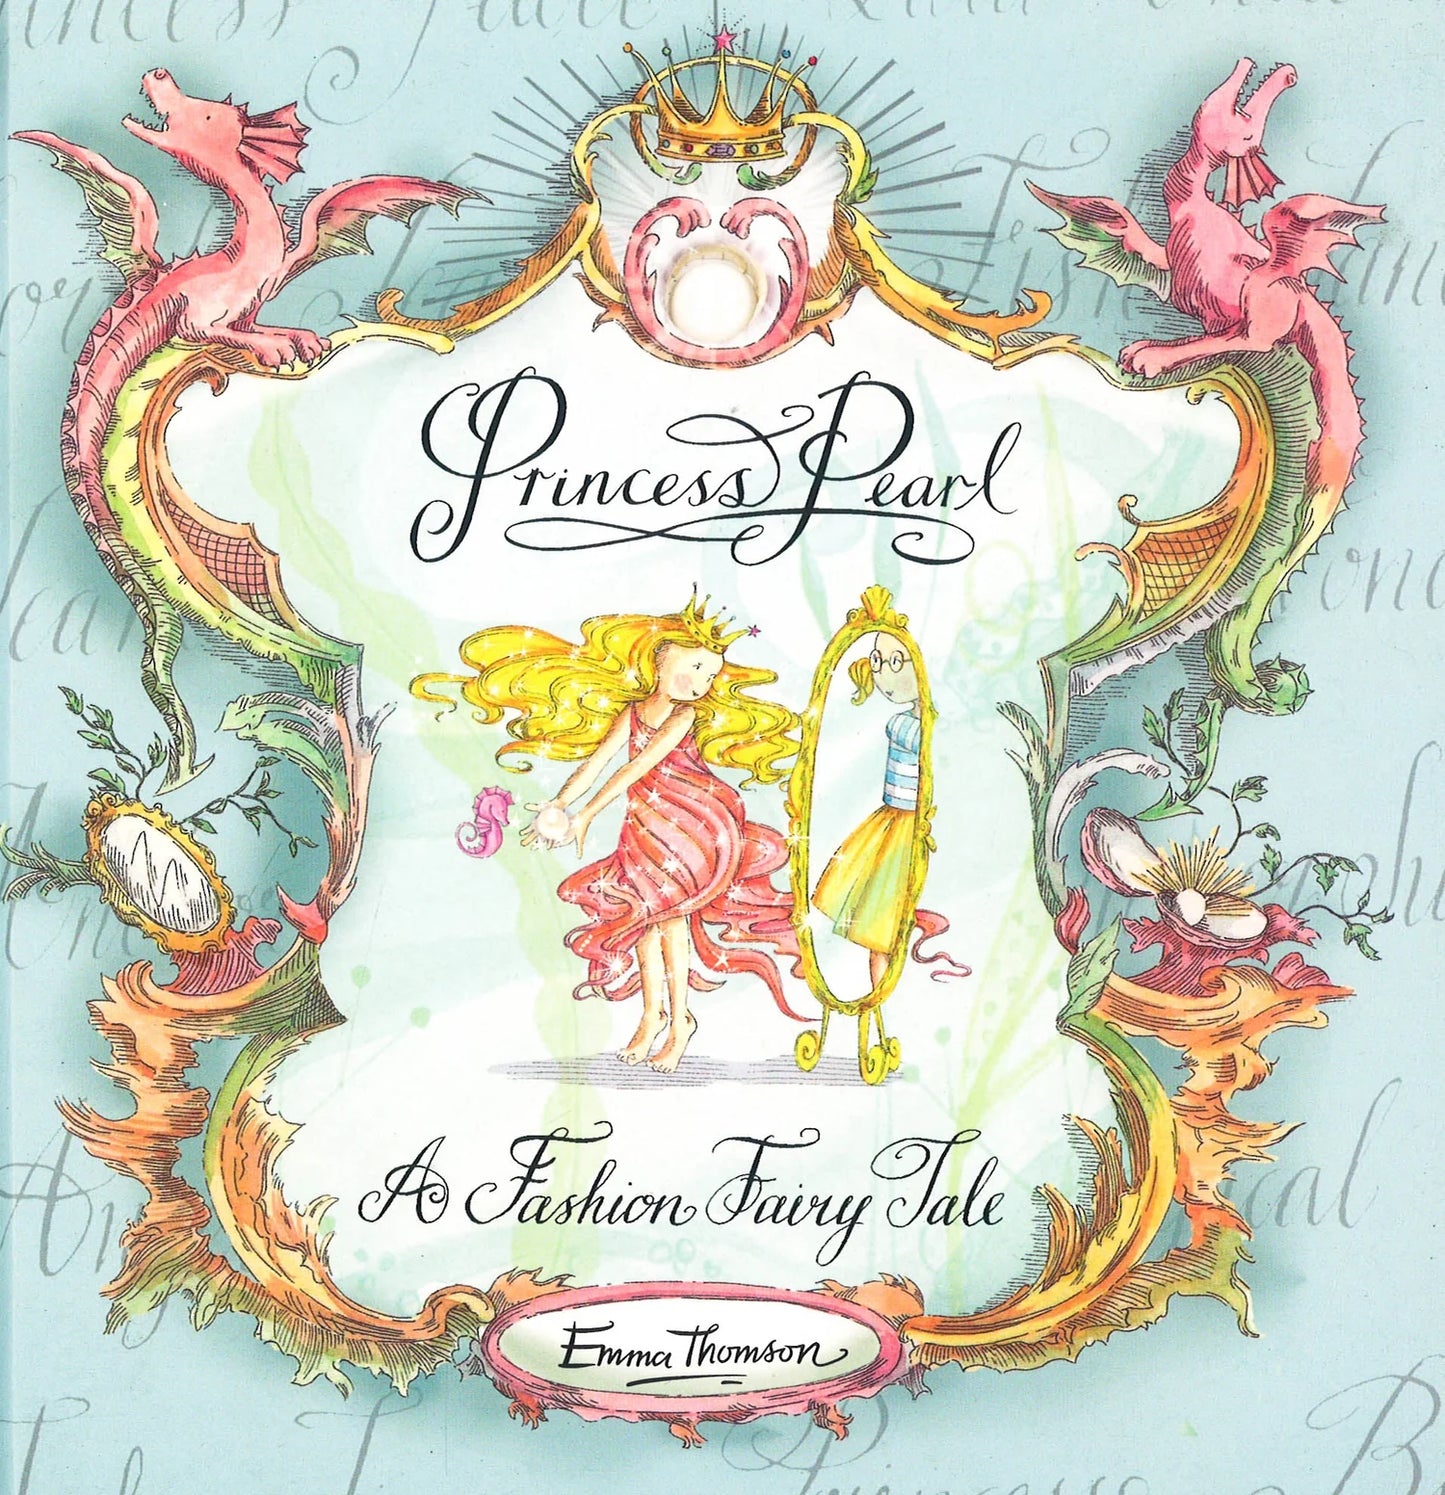 Princess Pearl - A Fashion Fairy Tale by Emma Thomson